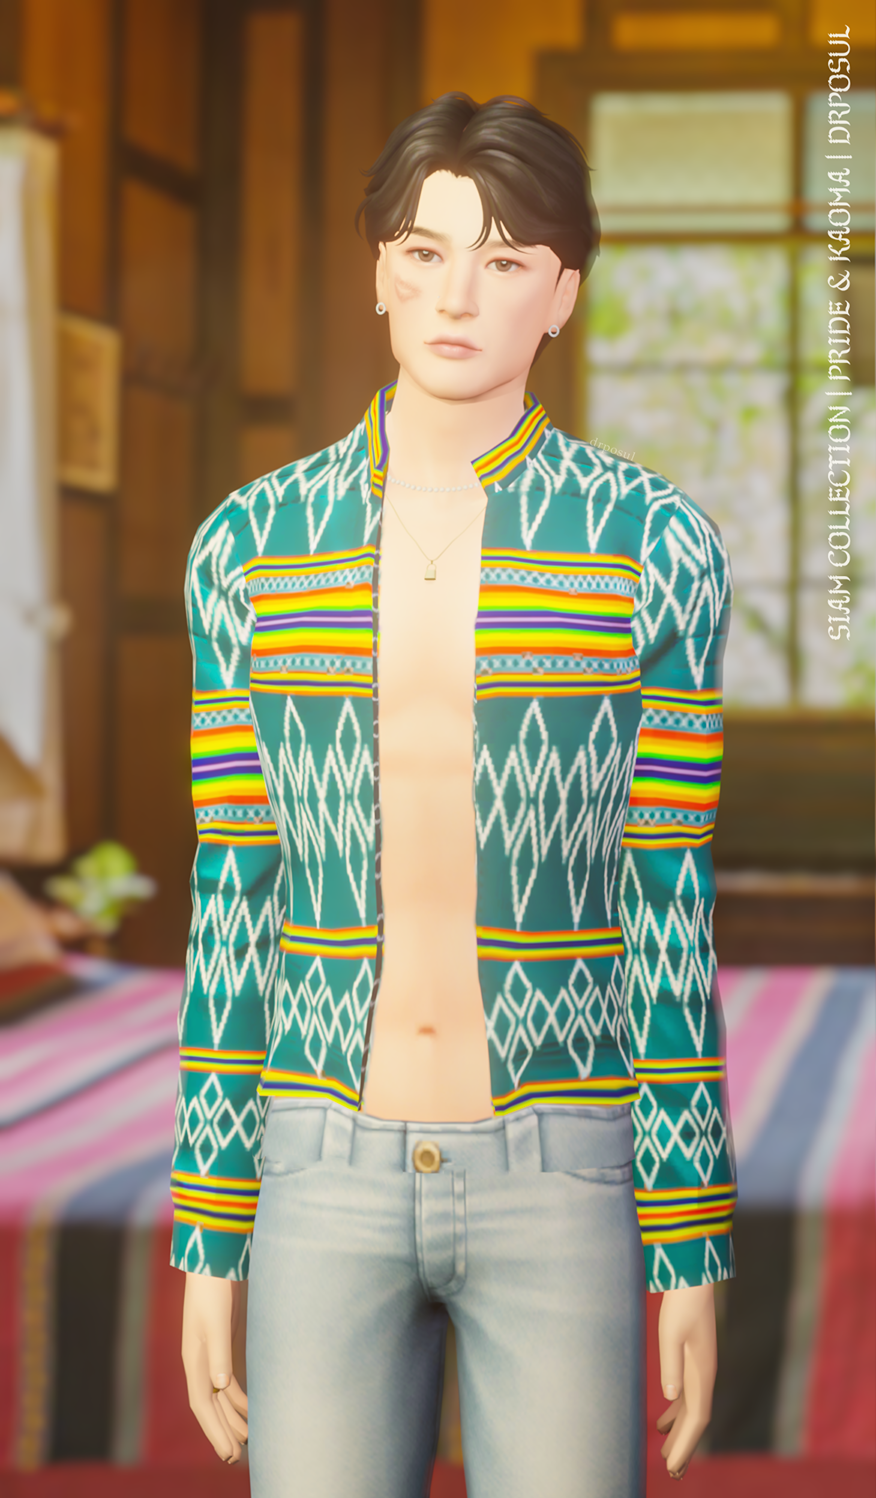 Siam Collection: Pride & Kaoma - The Sims 4 Create a Sim - CurseForge